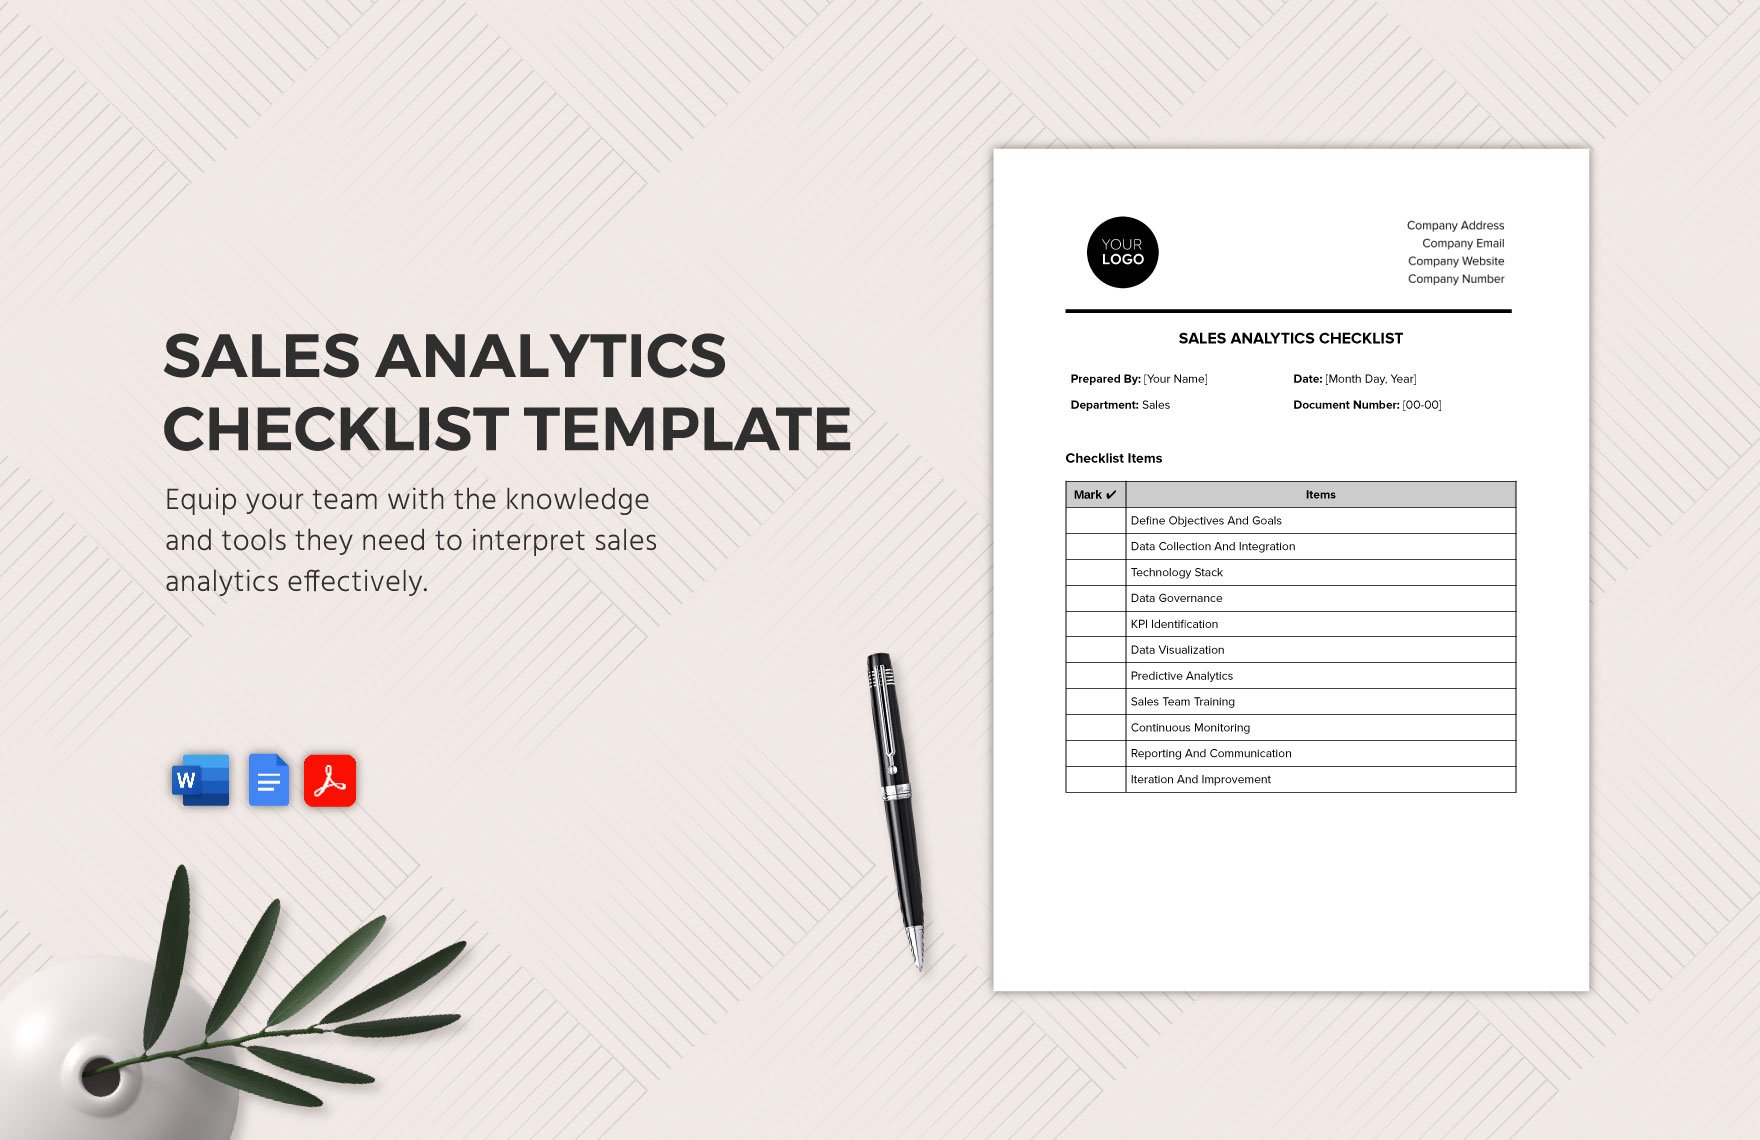 Sales Analytics Checklist Template in Word, Google Docs, PDF